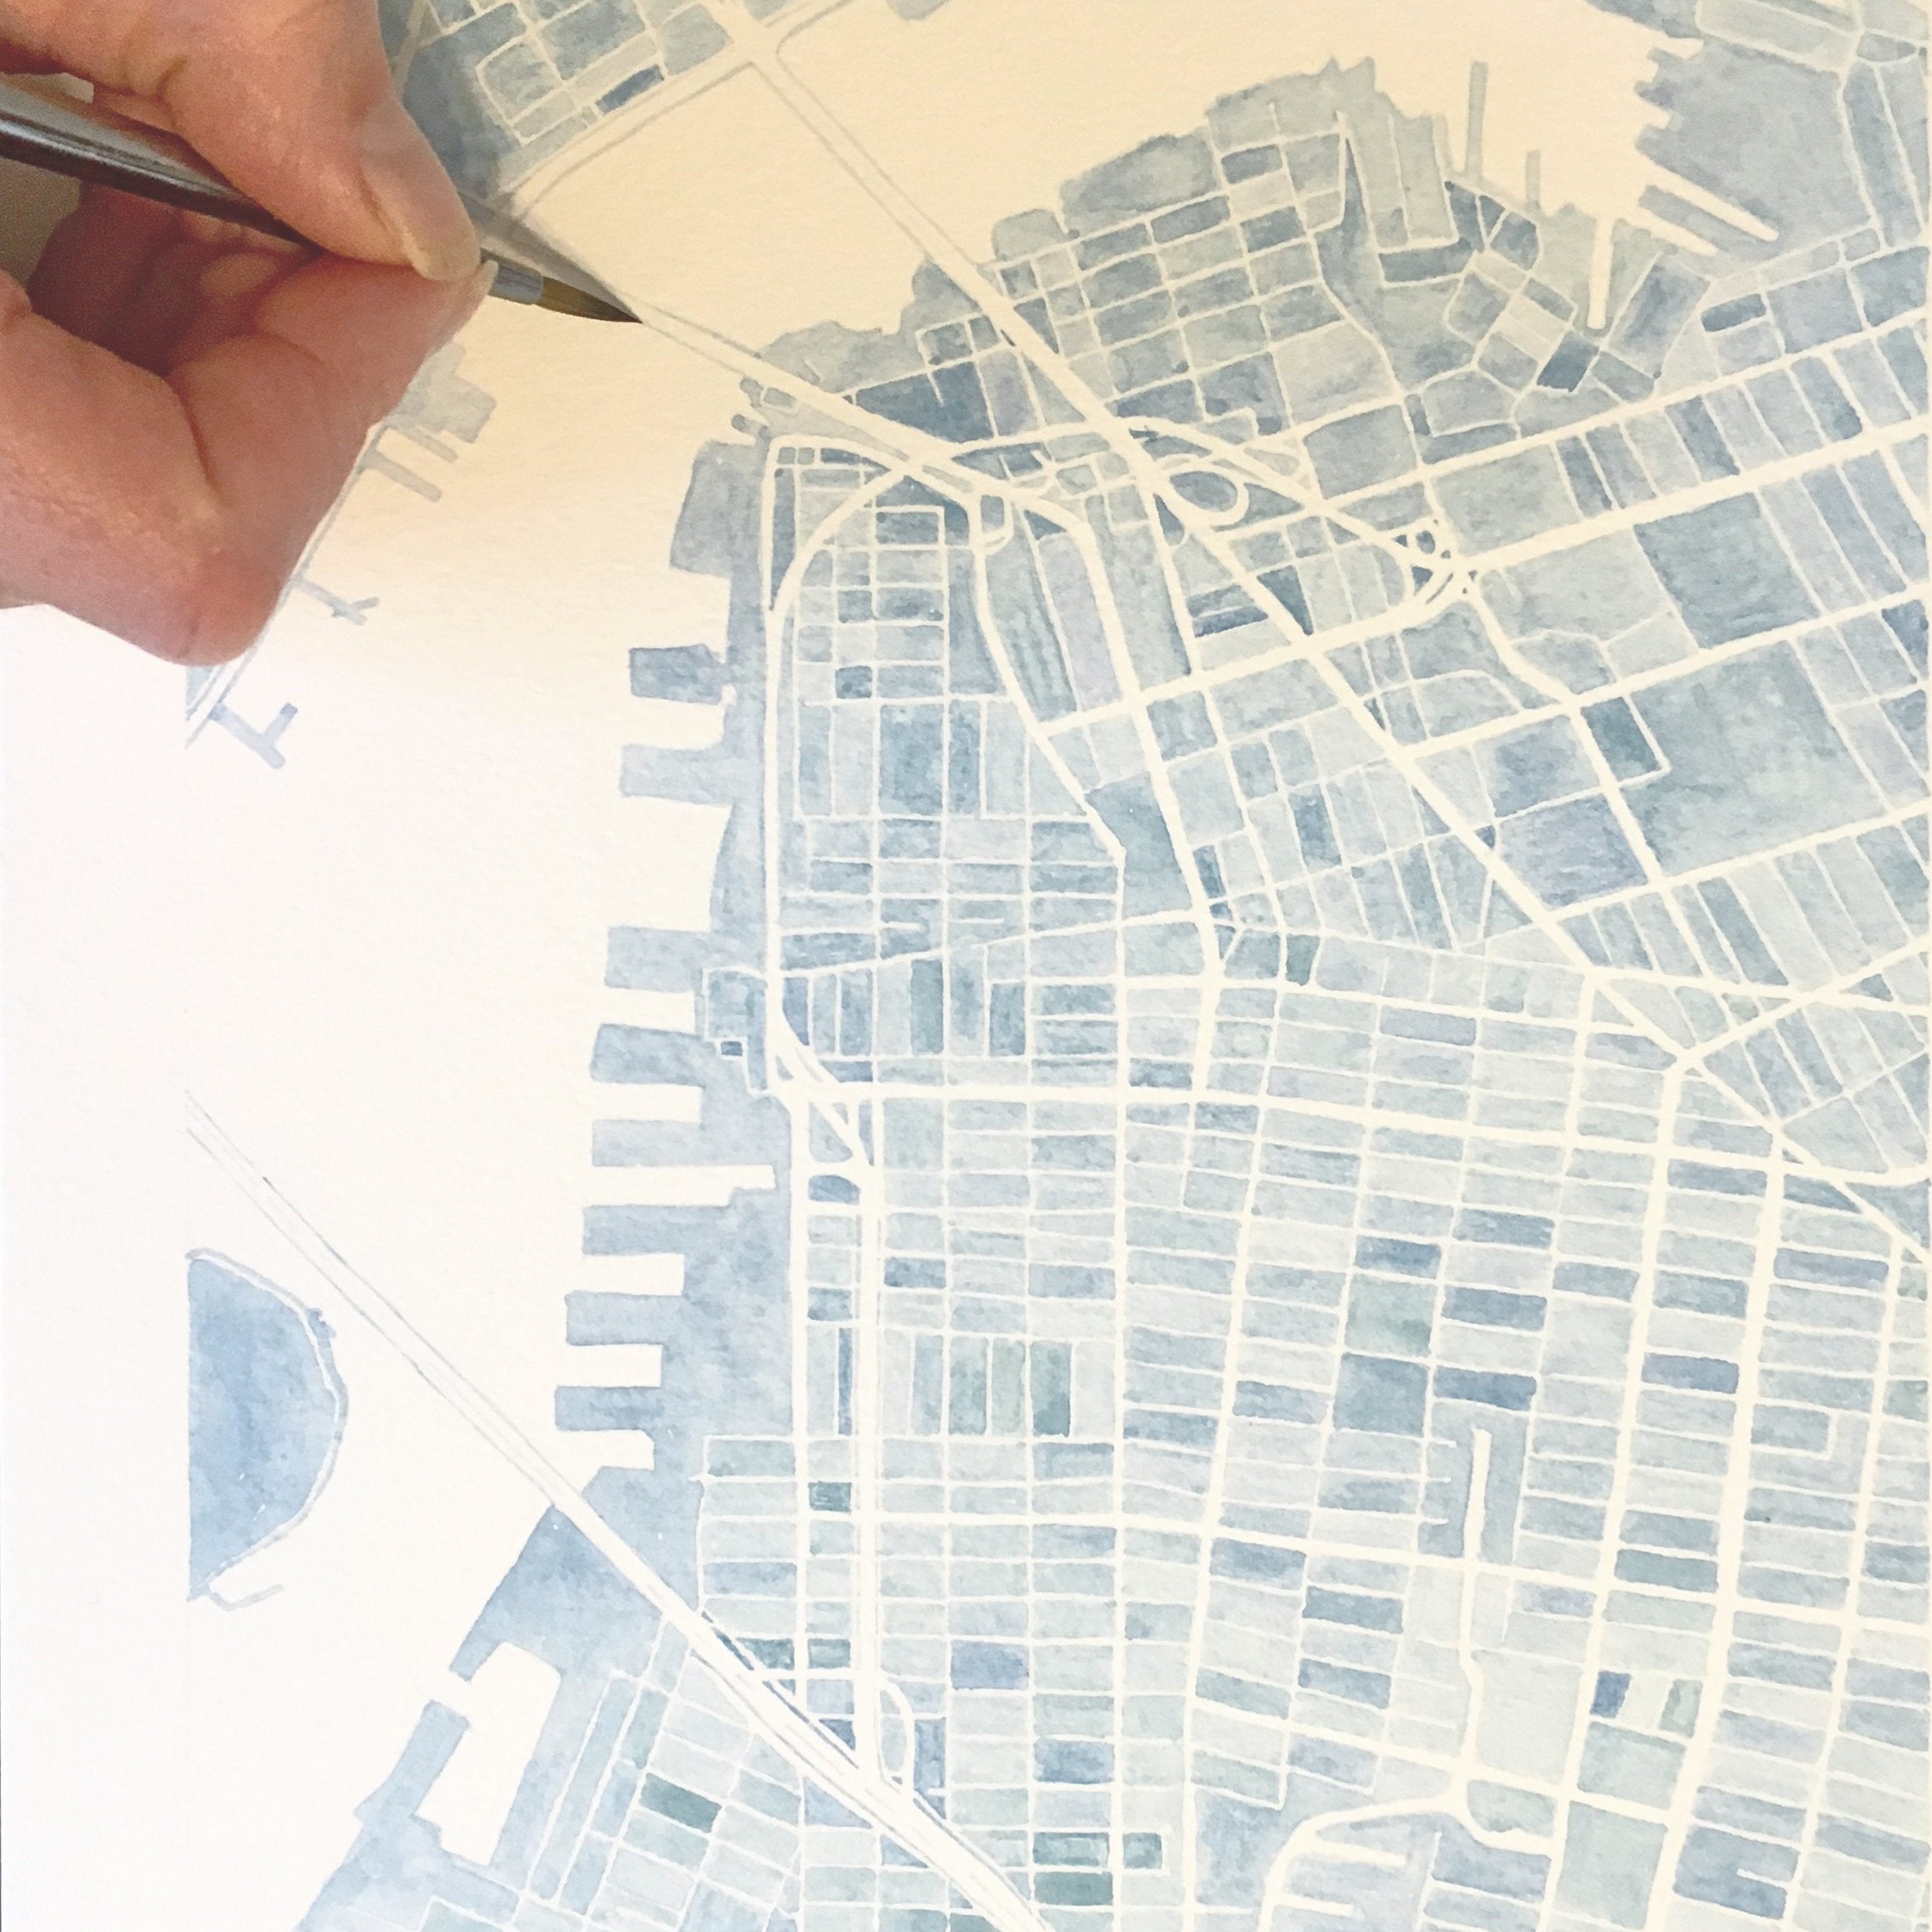 BROOKLYN HEIGHTS Watercolor City Blocks Map: PRINT